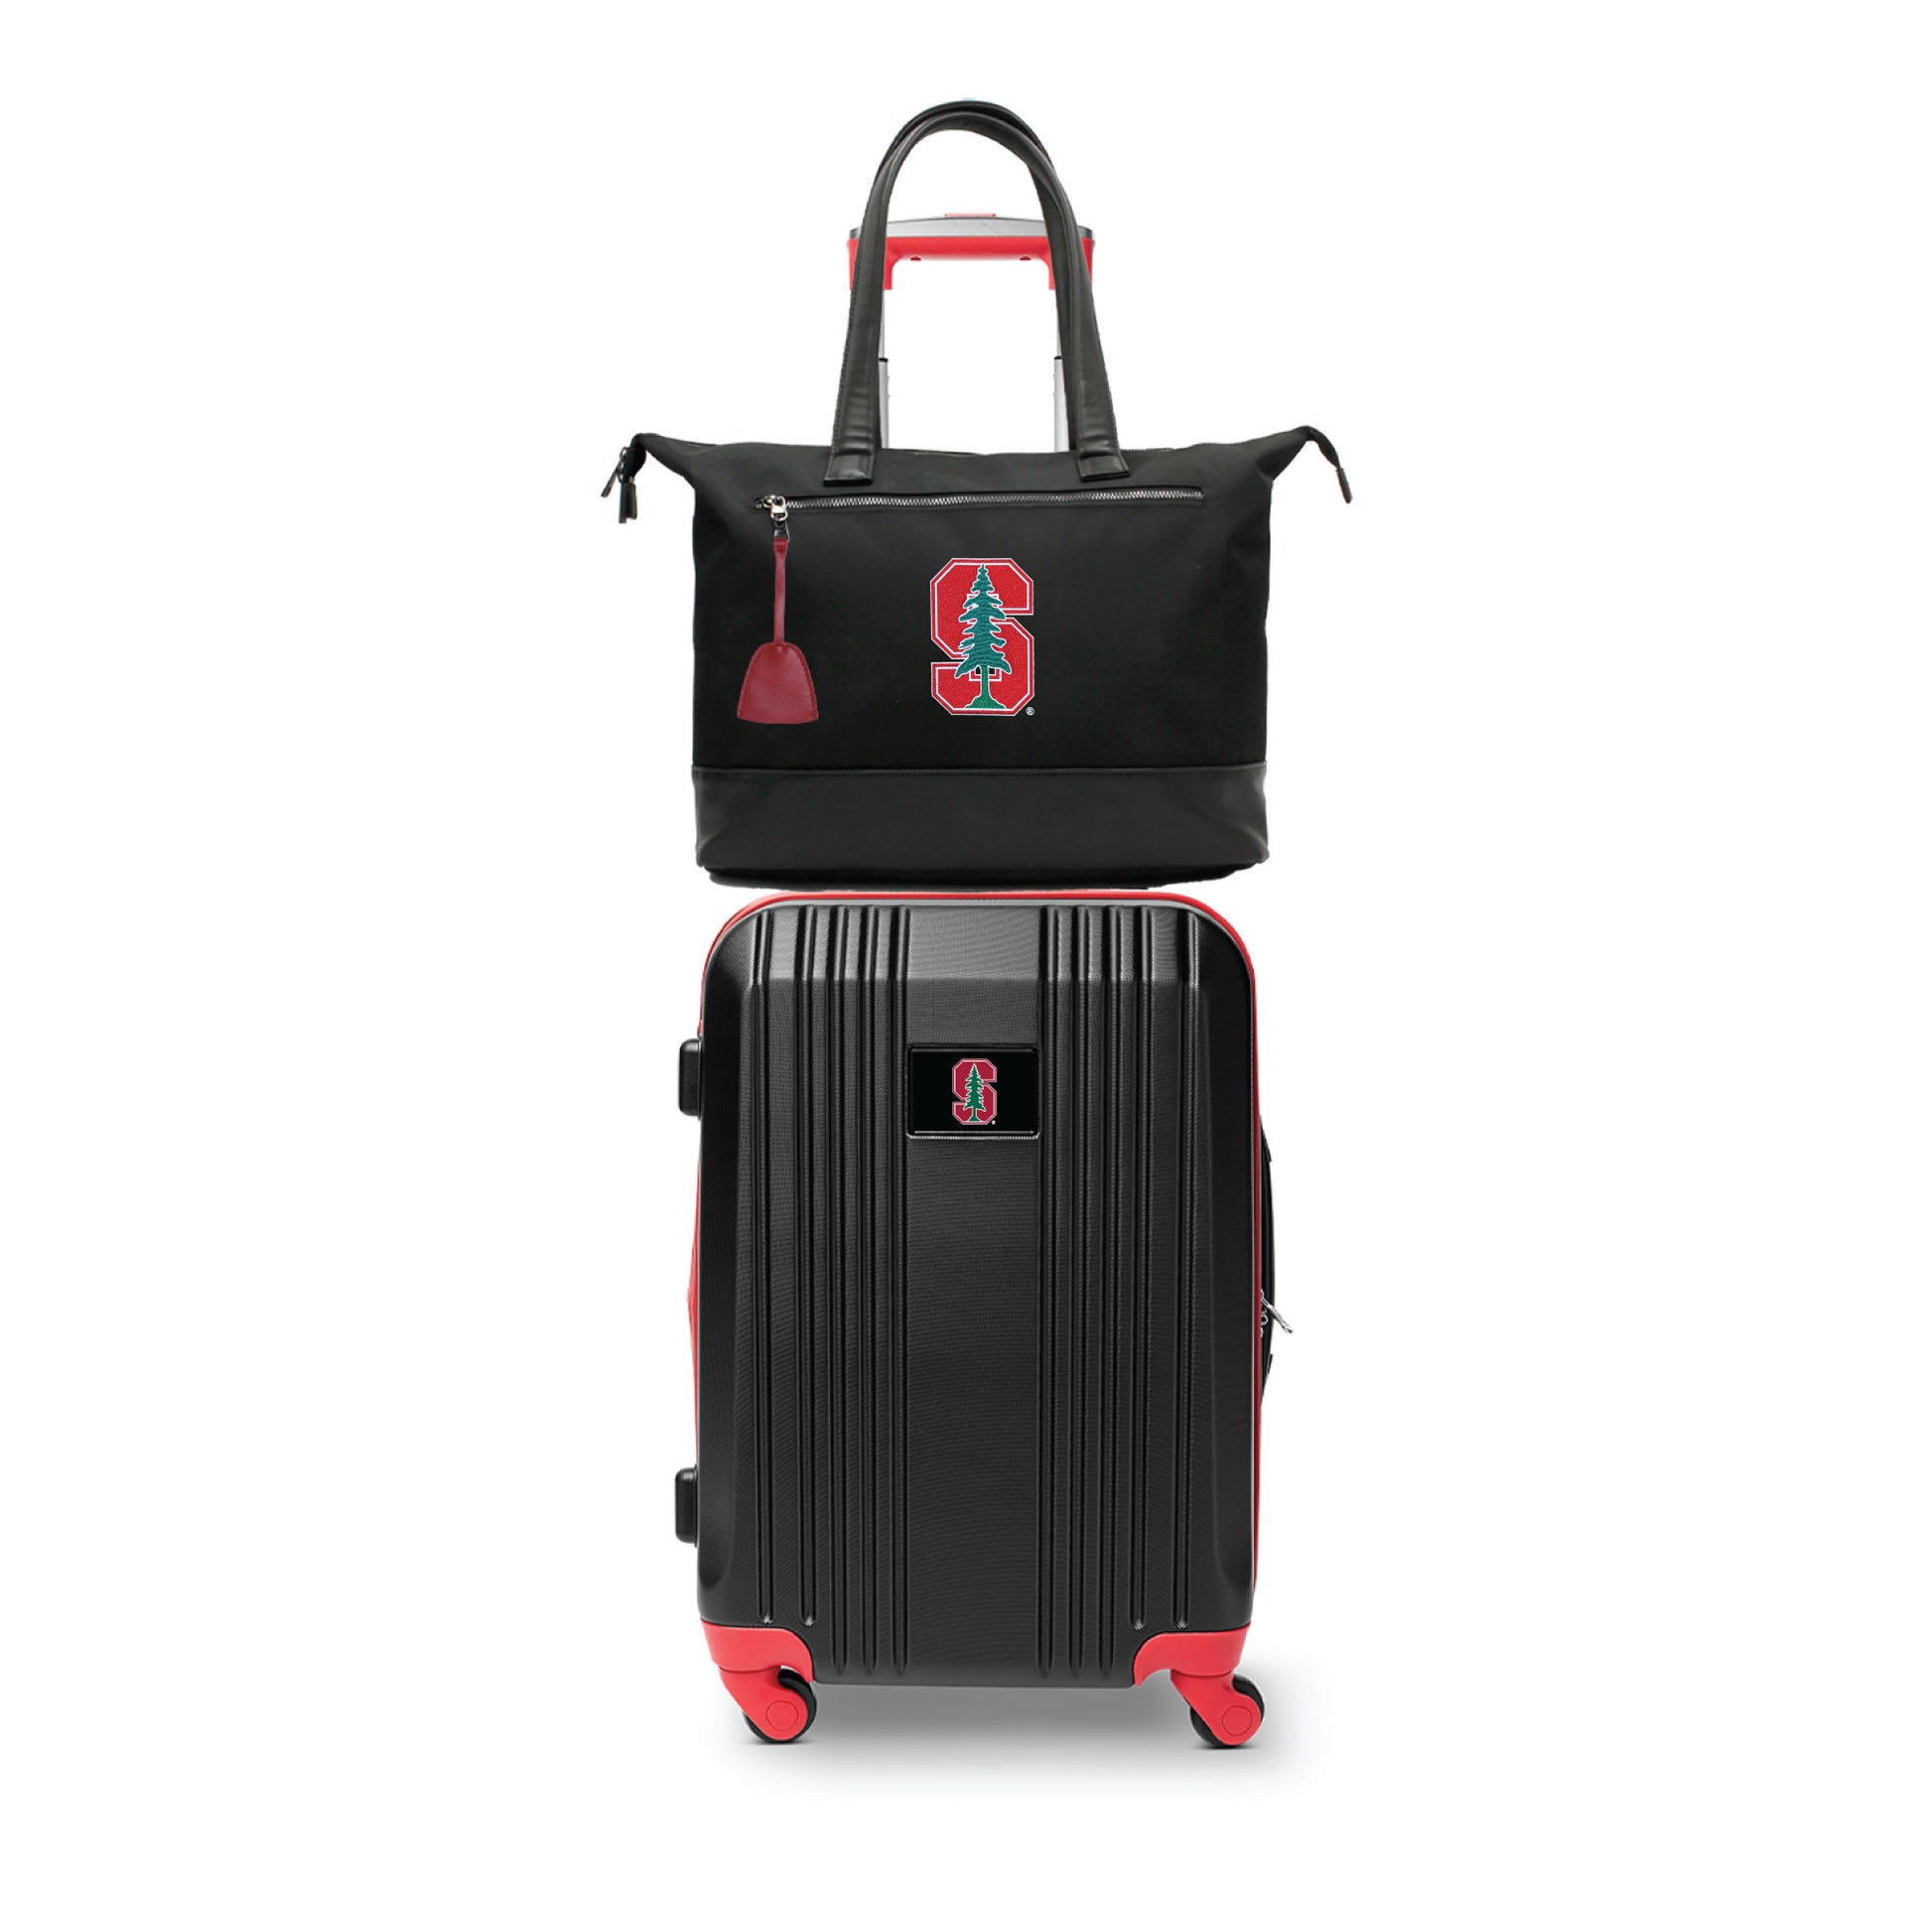 Stanford Cardinal Premium Laptop Tote Bag and Luggage Set